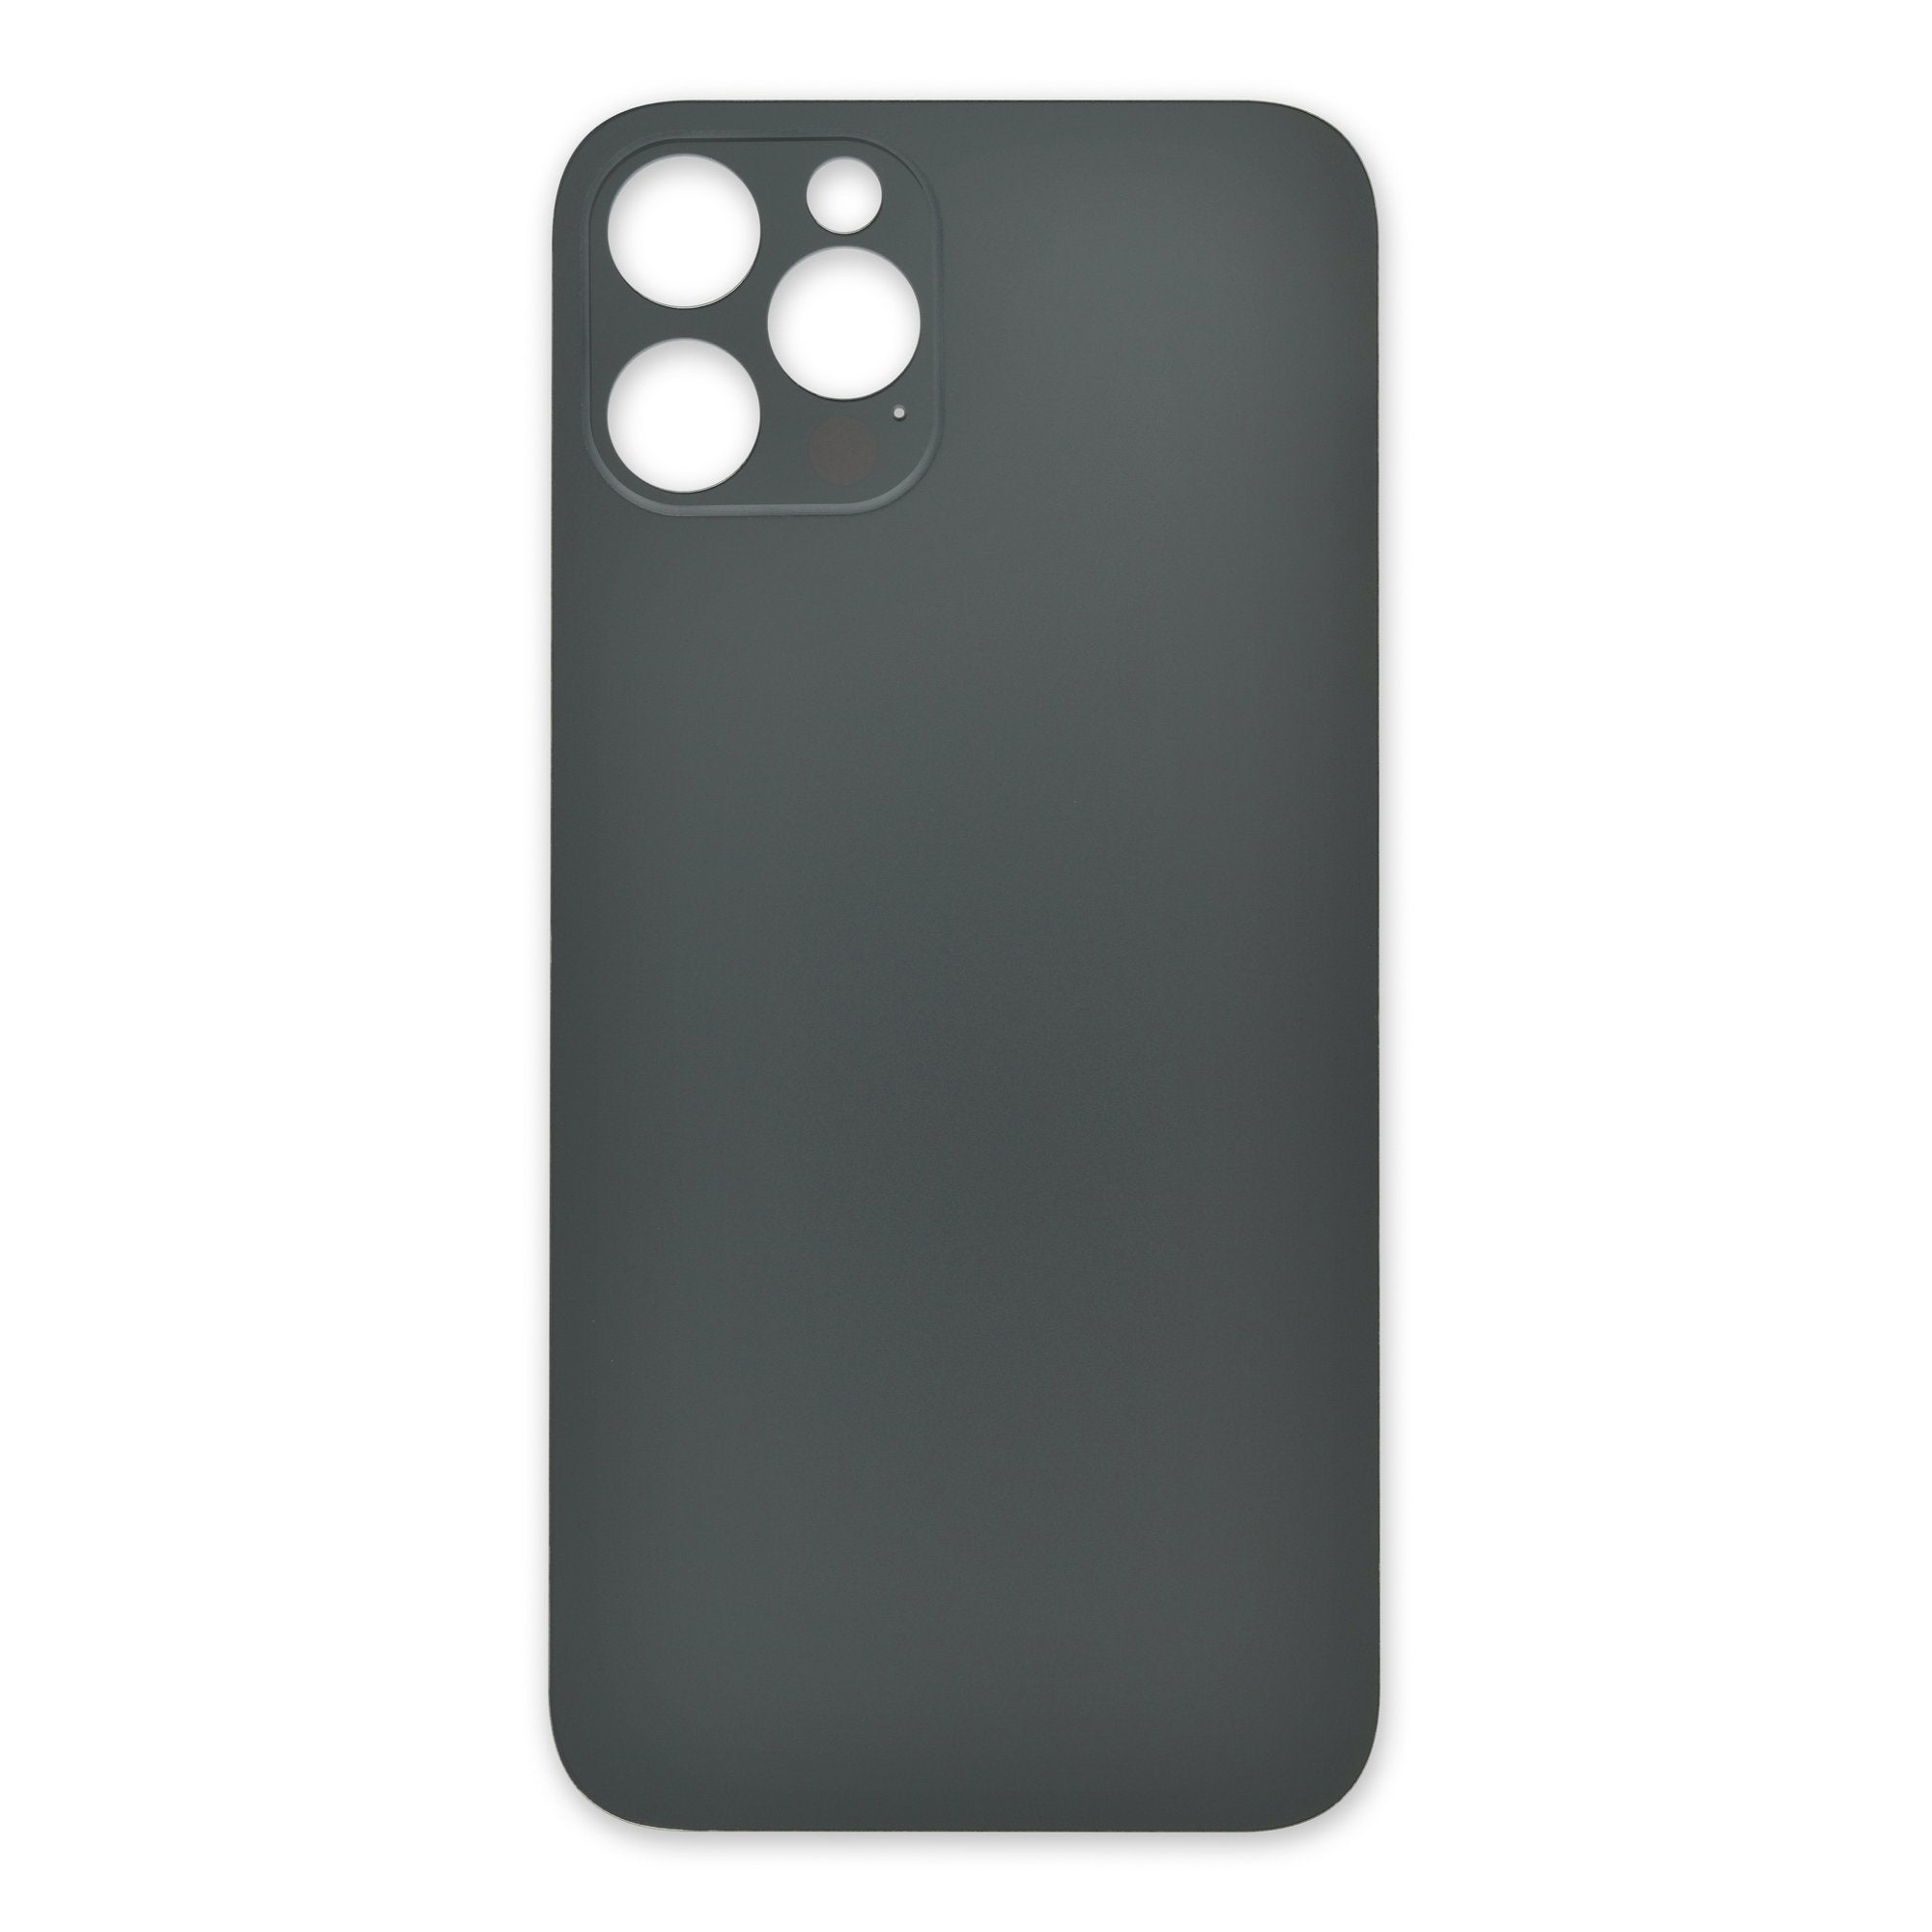 iPhone 12 Pro Aftermarket Blank Rear Glass Panel Dark Gray New